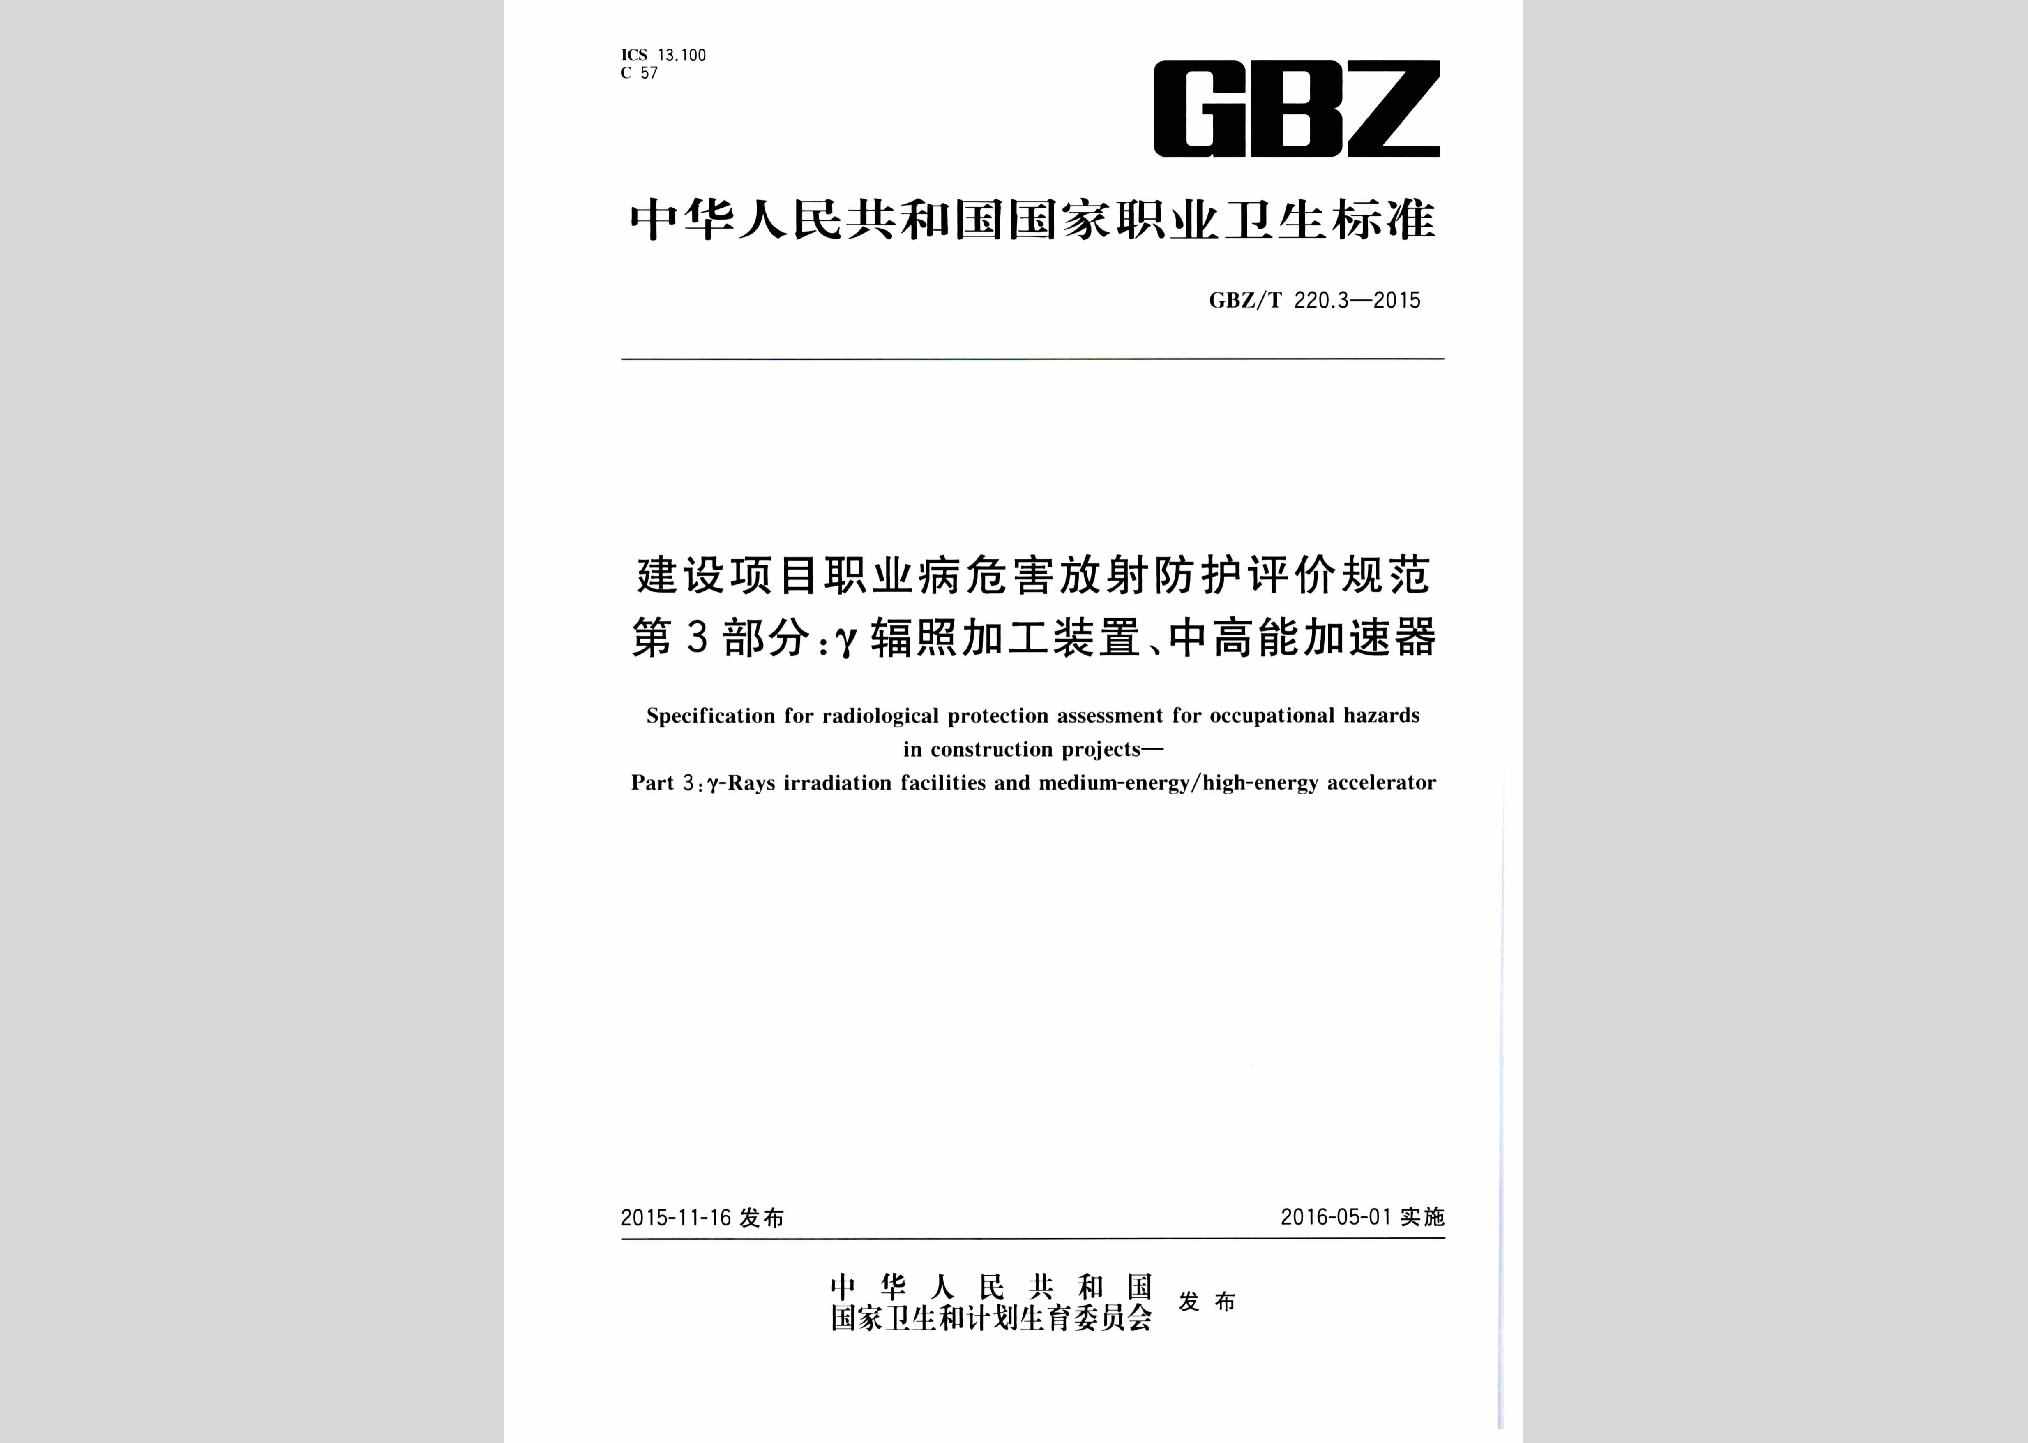 GBZ/T220.3-2015：建设项目职业病危害放射防护评价规范第3部分:γ辐照加工装置、中高能加速器